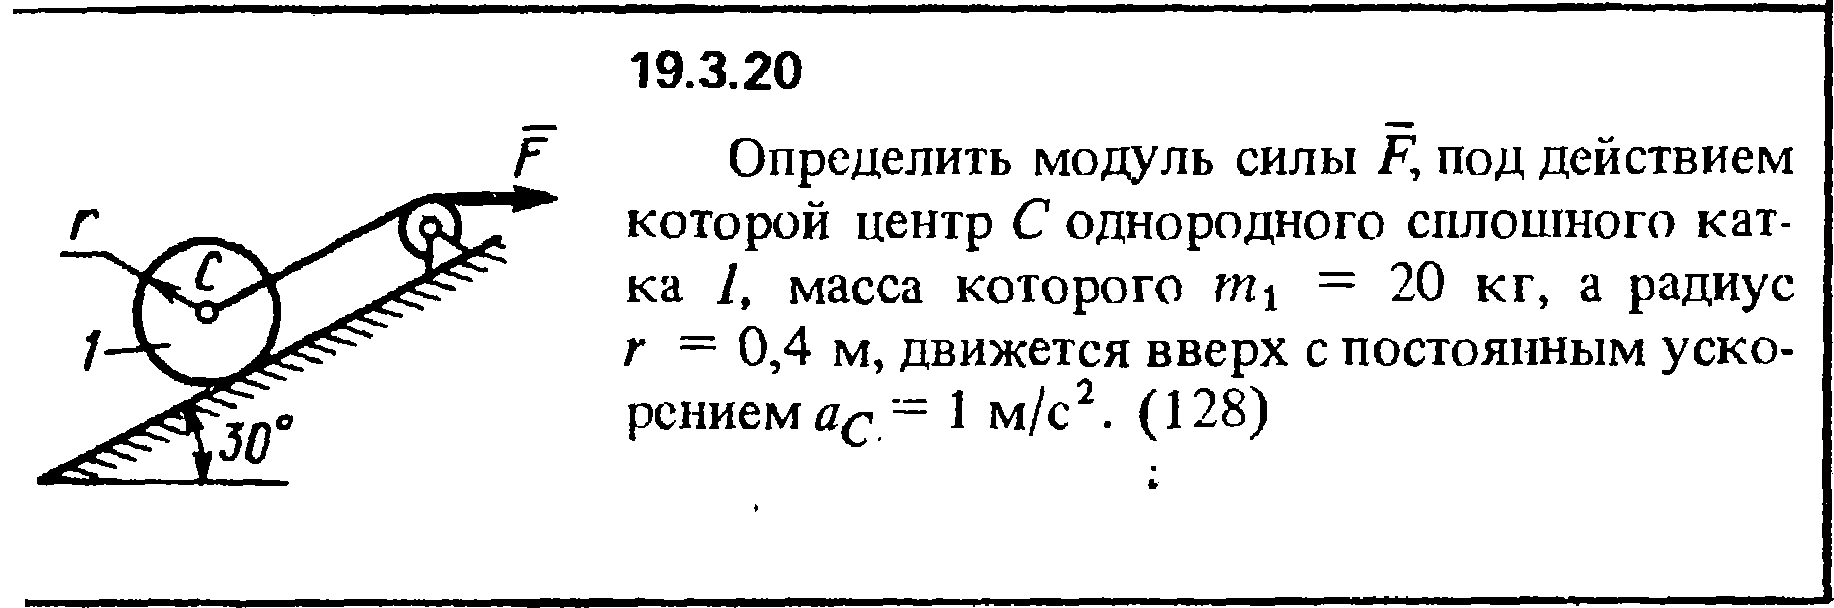 Решение 19.3.20 из сборника (решебника) Кепе О.Е. 1989